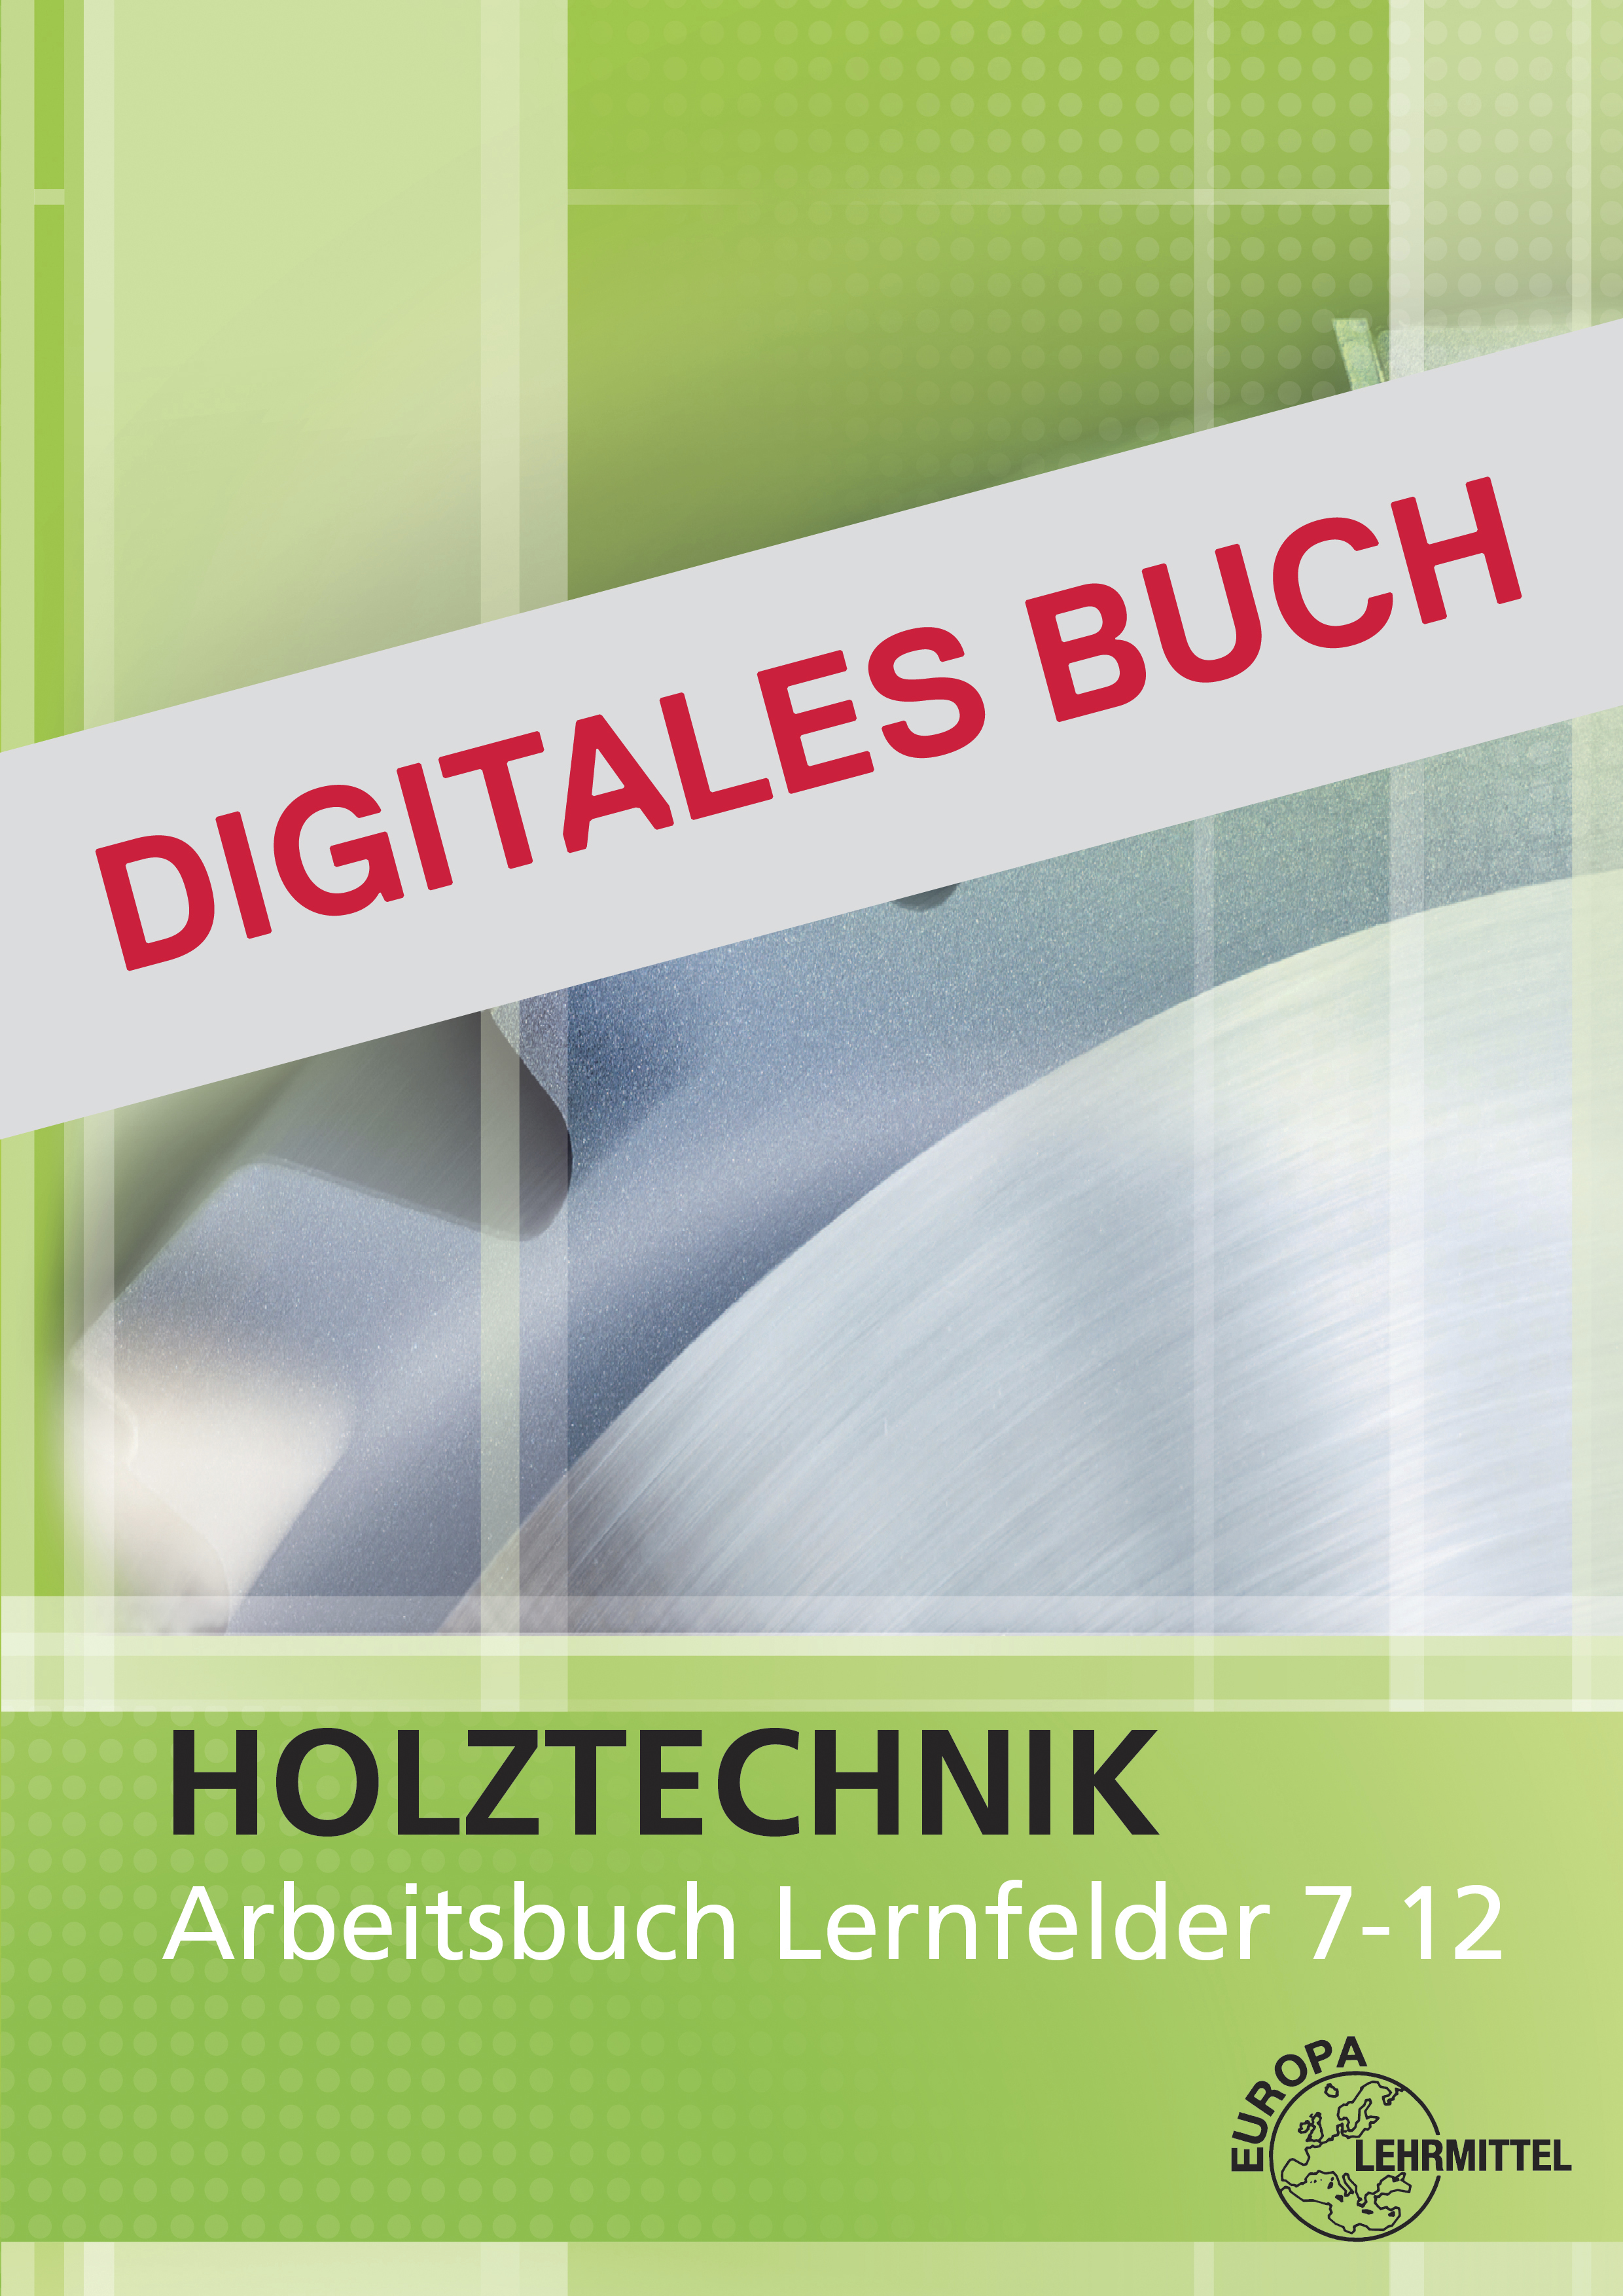 Holztechnik Arbeitsbuch Lernfelder 7-12 - Digitales Buch